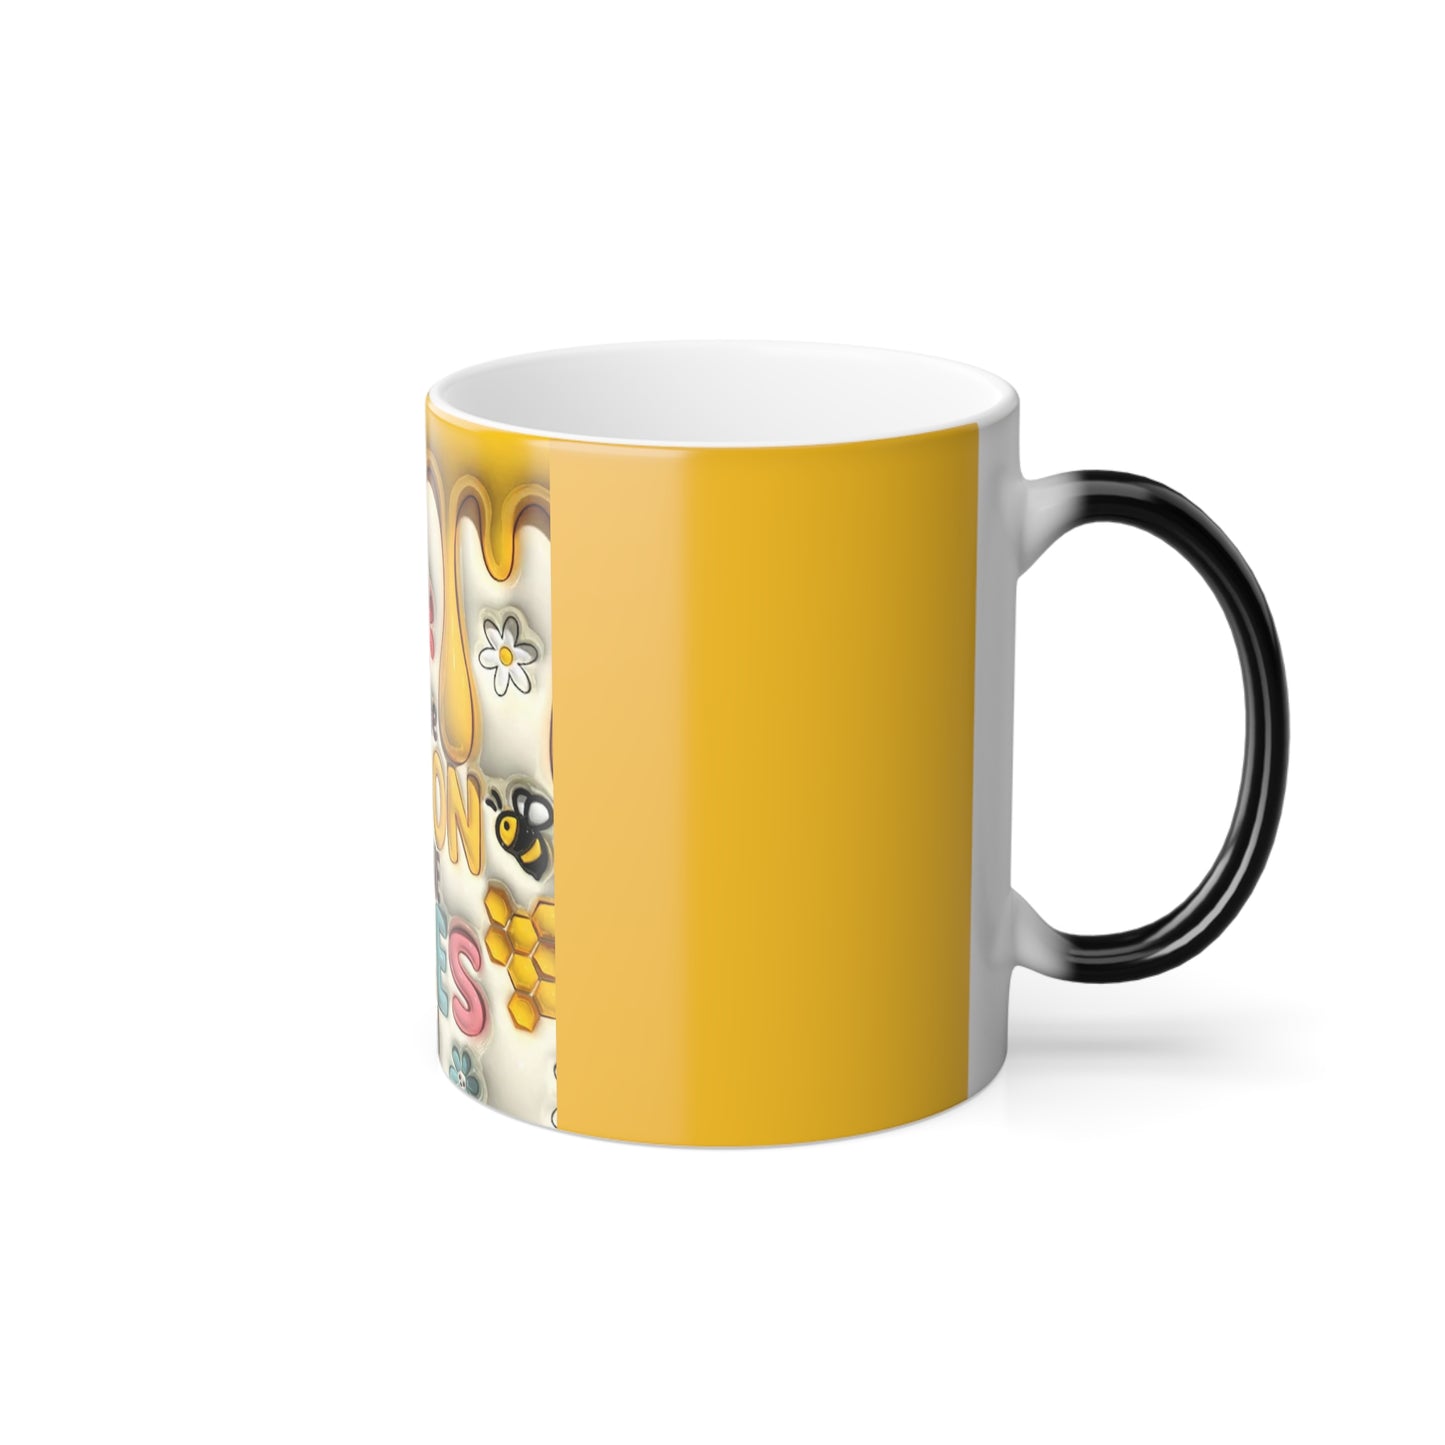 Copy of Cute yellow Color  Mug, 11oz